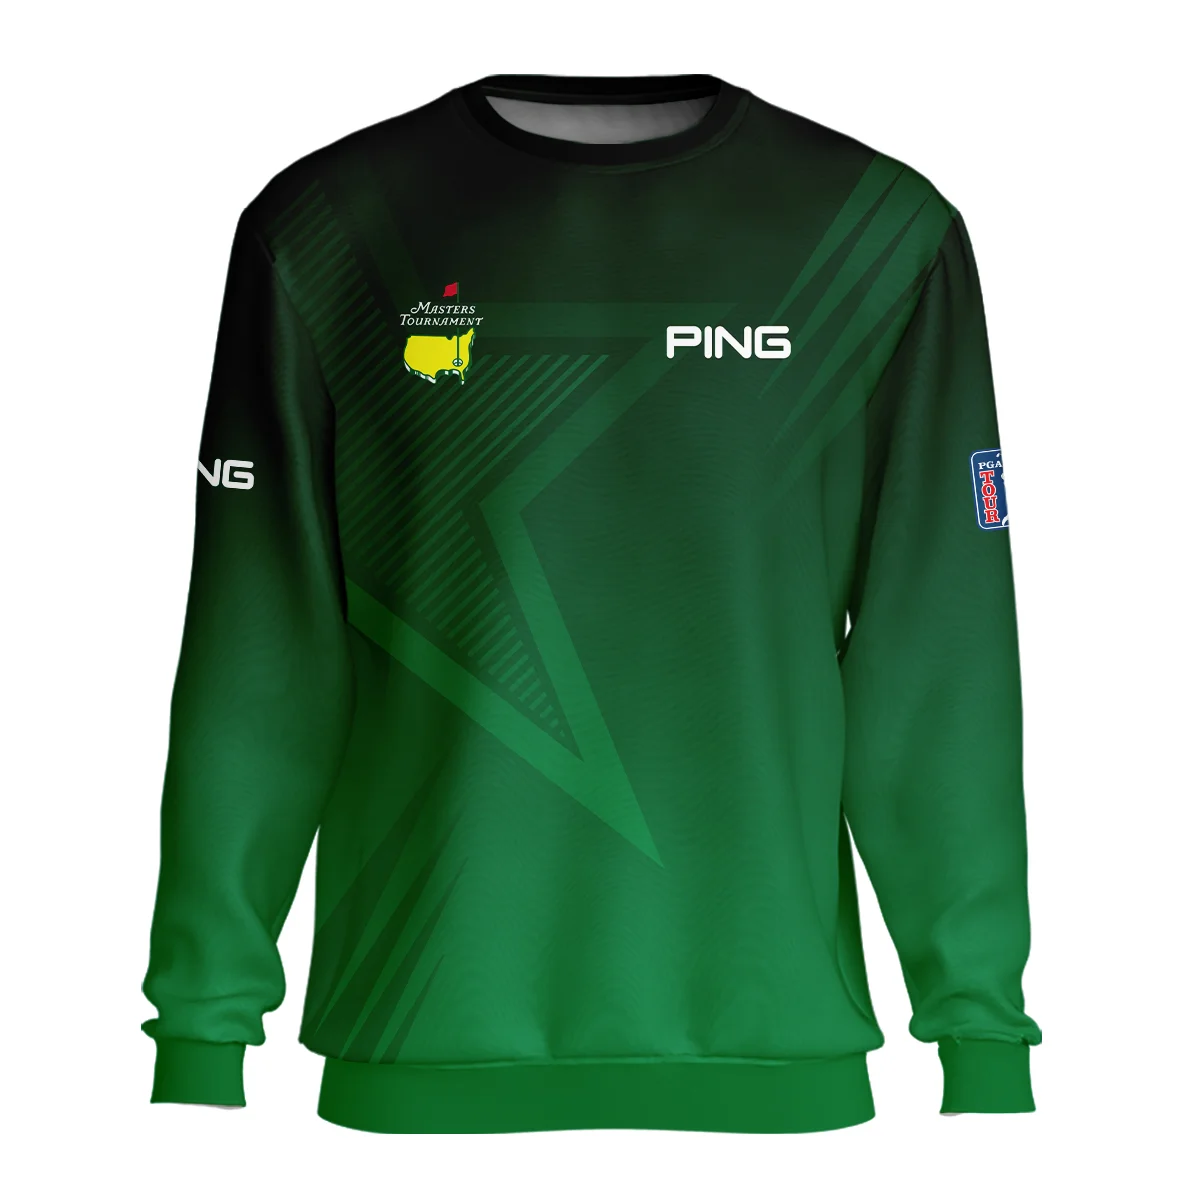 Ping Masters Tournament Unisex Sweatshirt Dark Green Gradient Star Pattern Golf Sports Sweatshirt